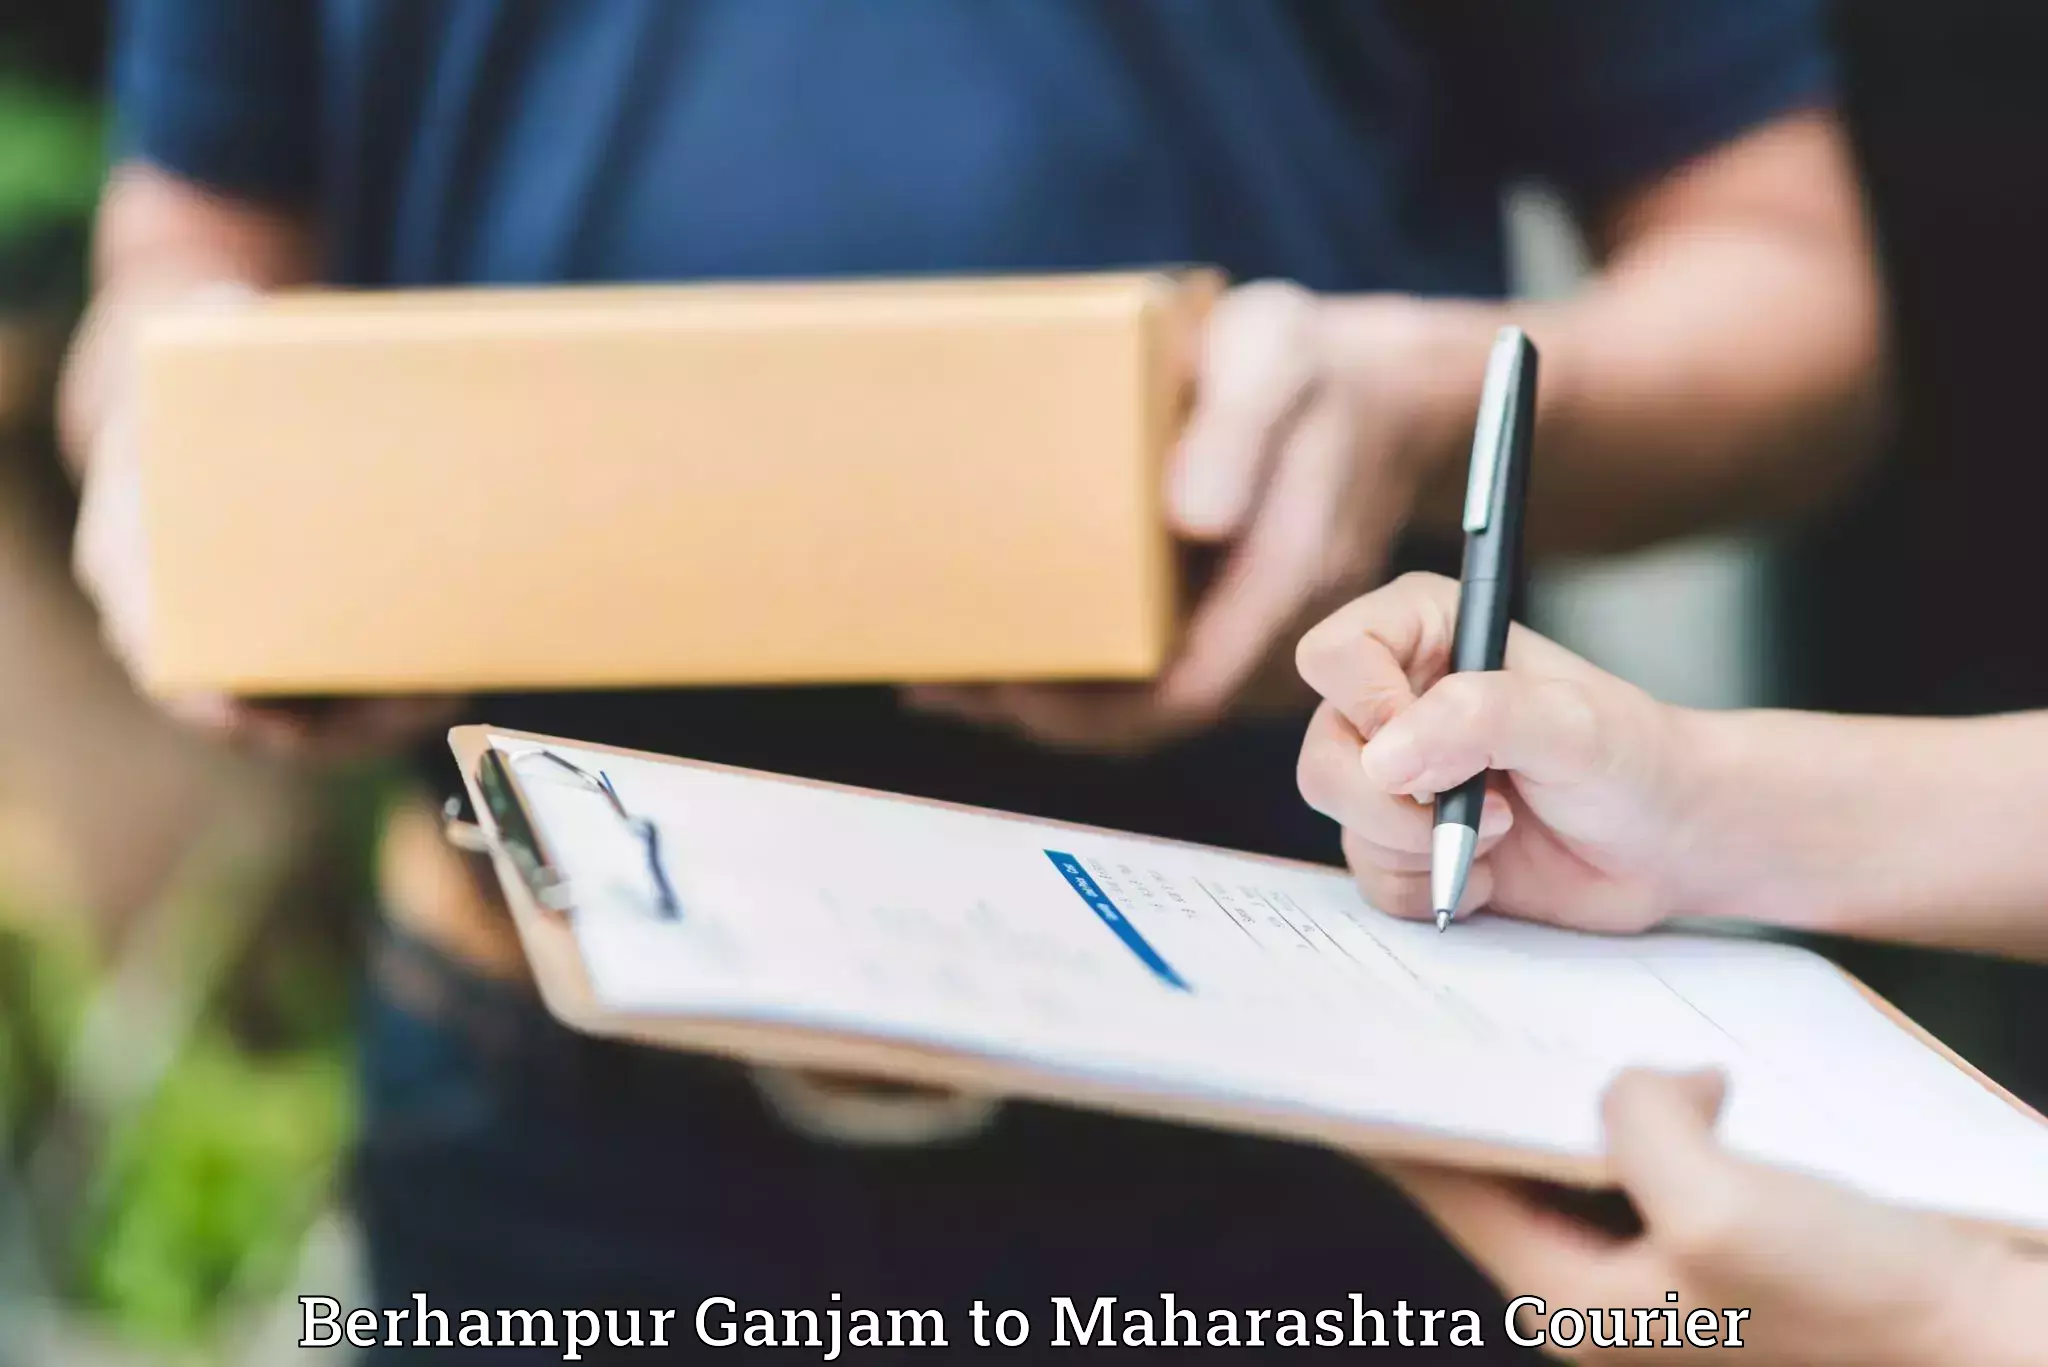 Professional moving company Berhampur Ganjam to Maharashtra